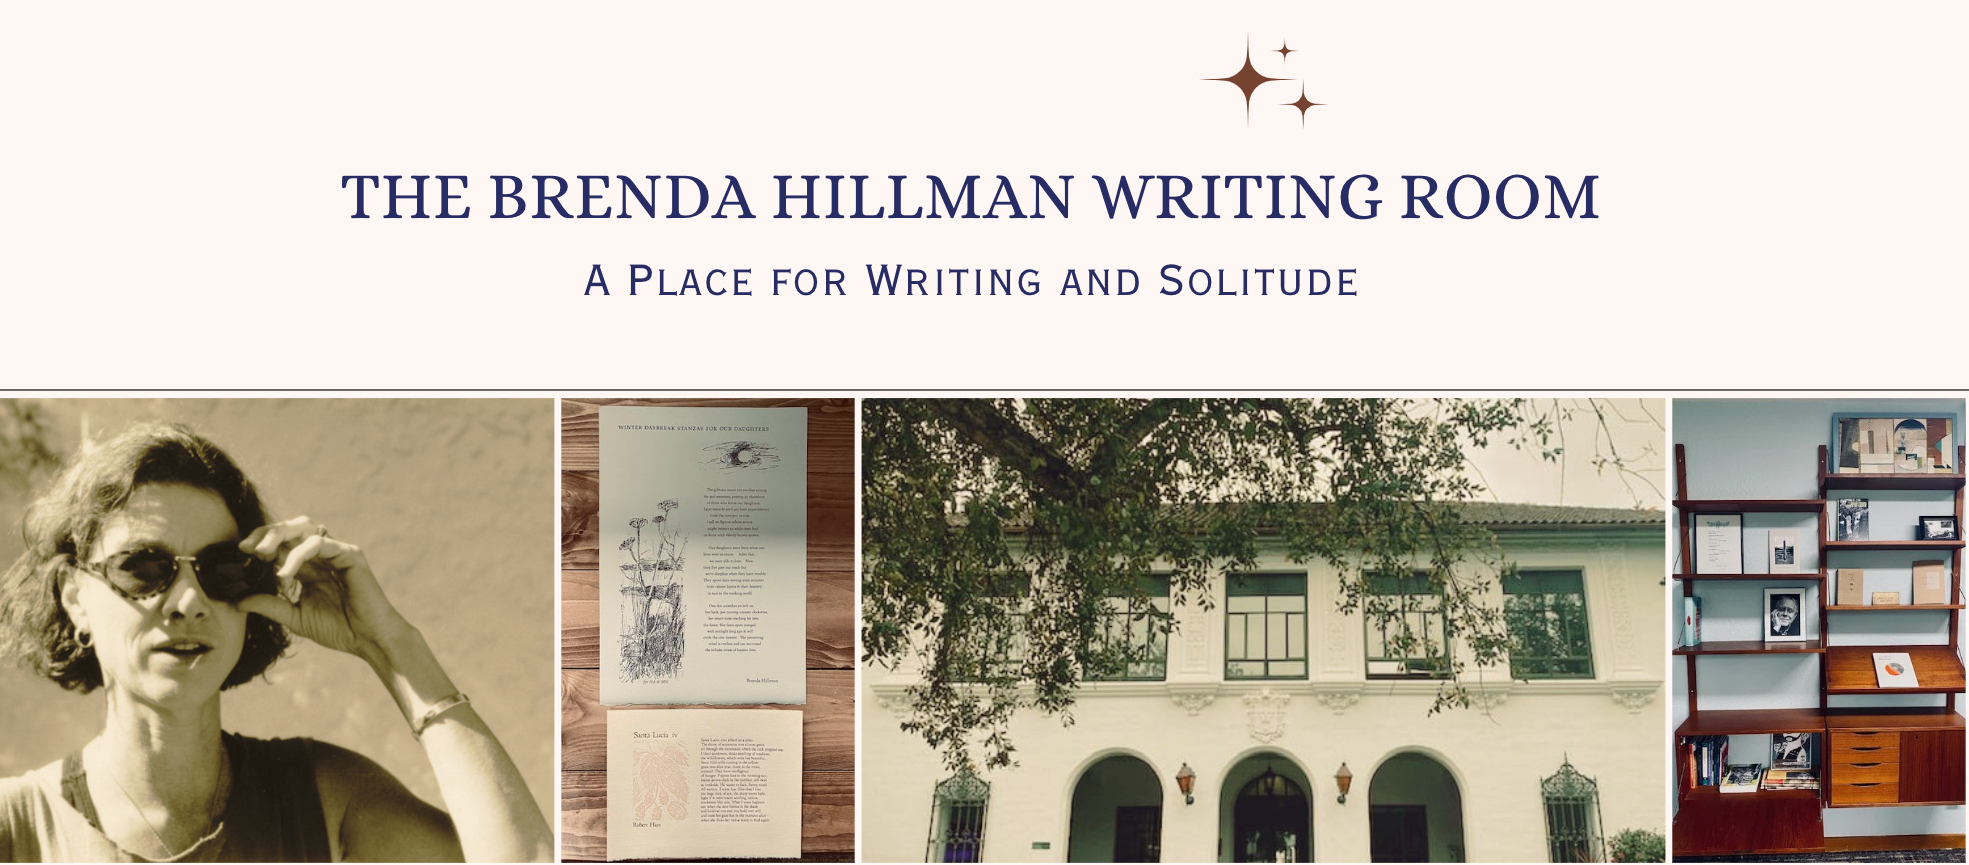 The Brenda Hillman Writing Room